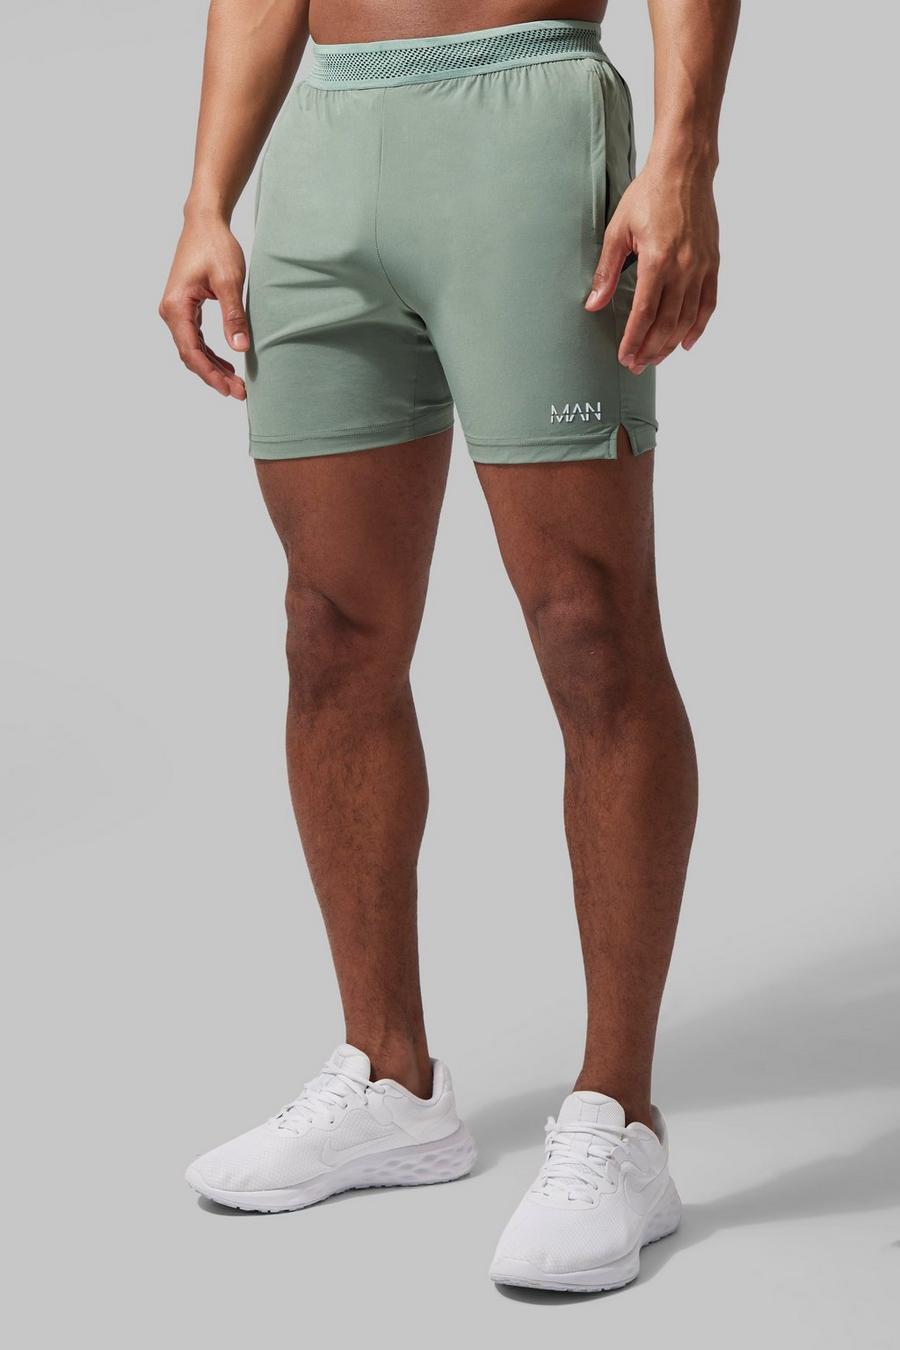 Man Active Performance-Shorts, Green